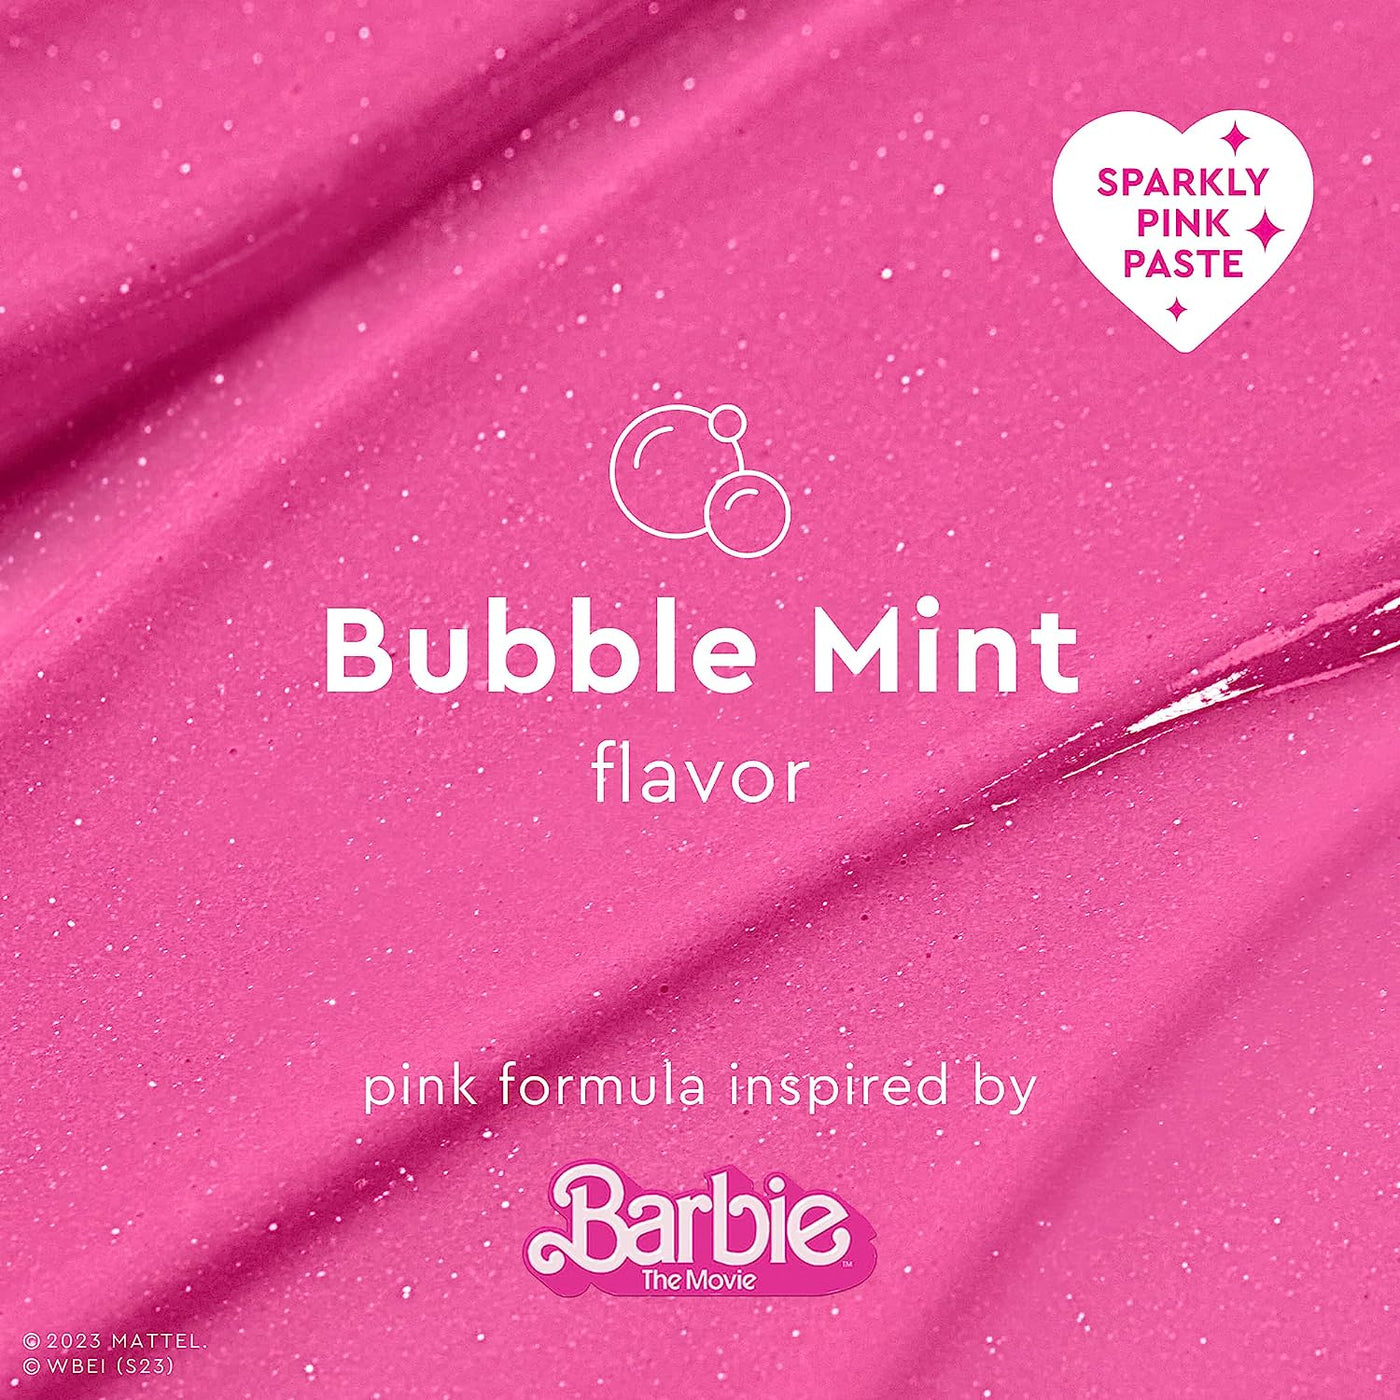 Barbie™ the Movie X MOON Bubble Mint Whitening